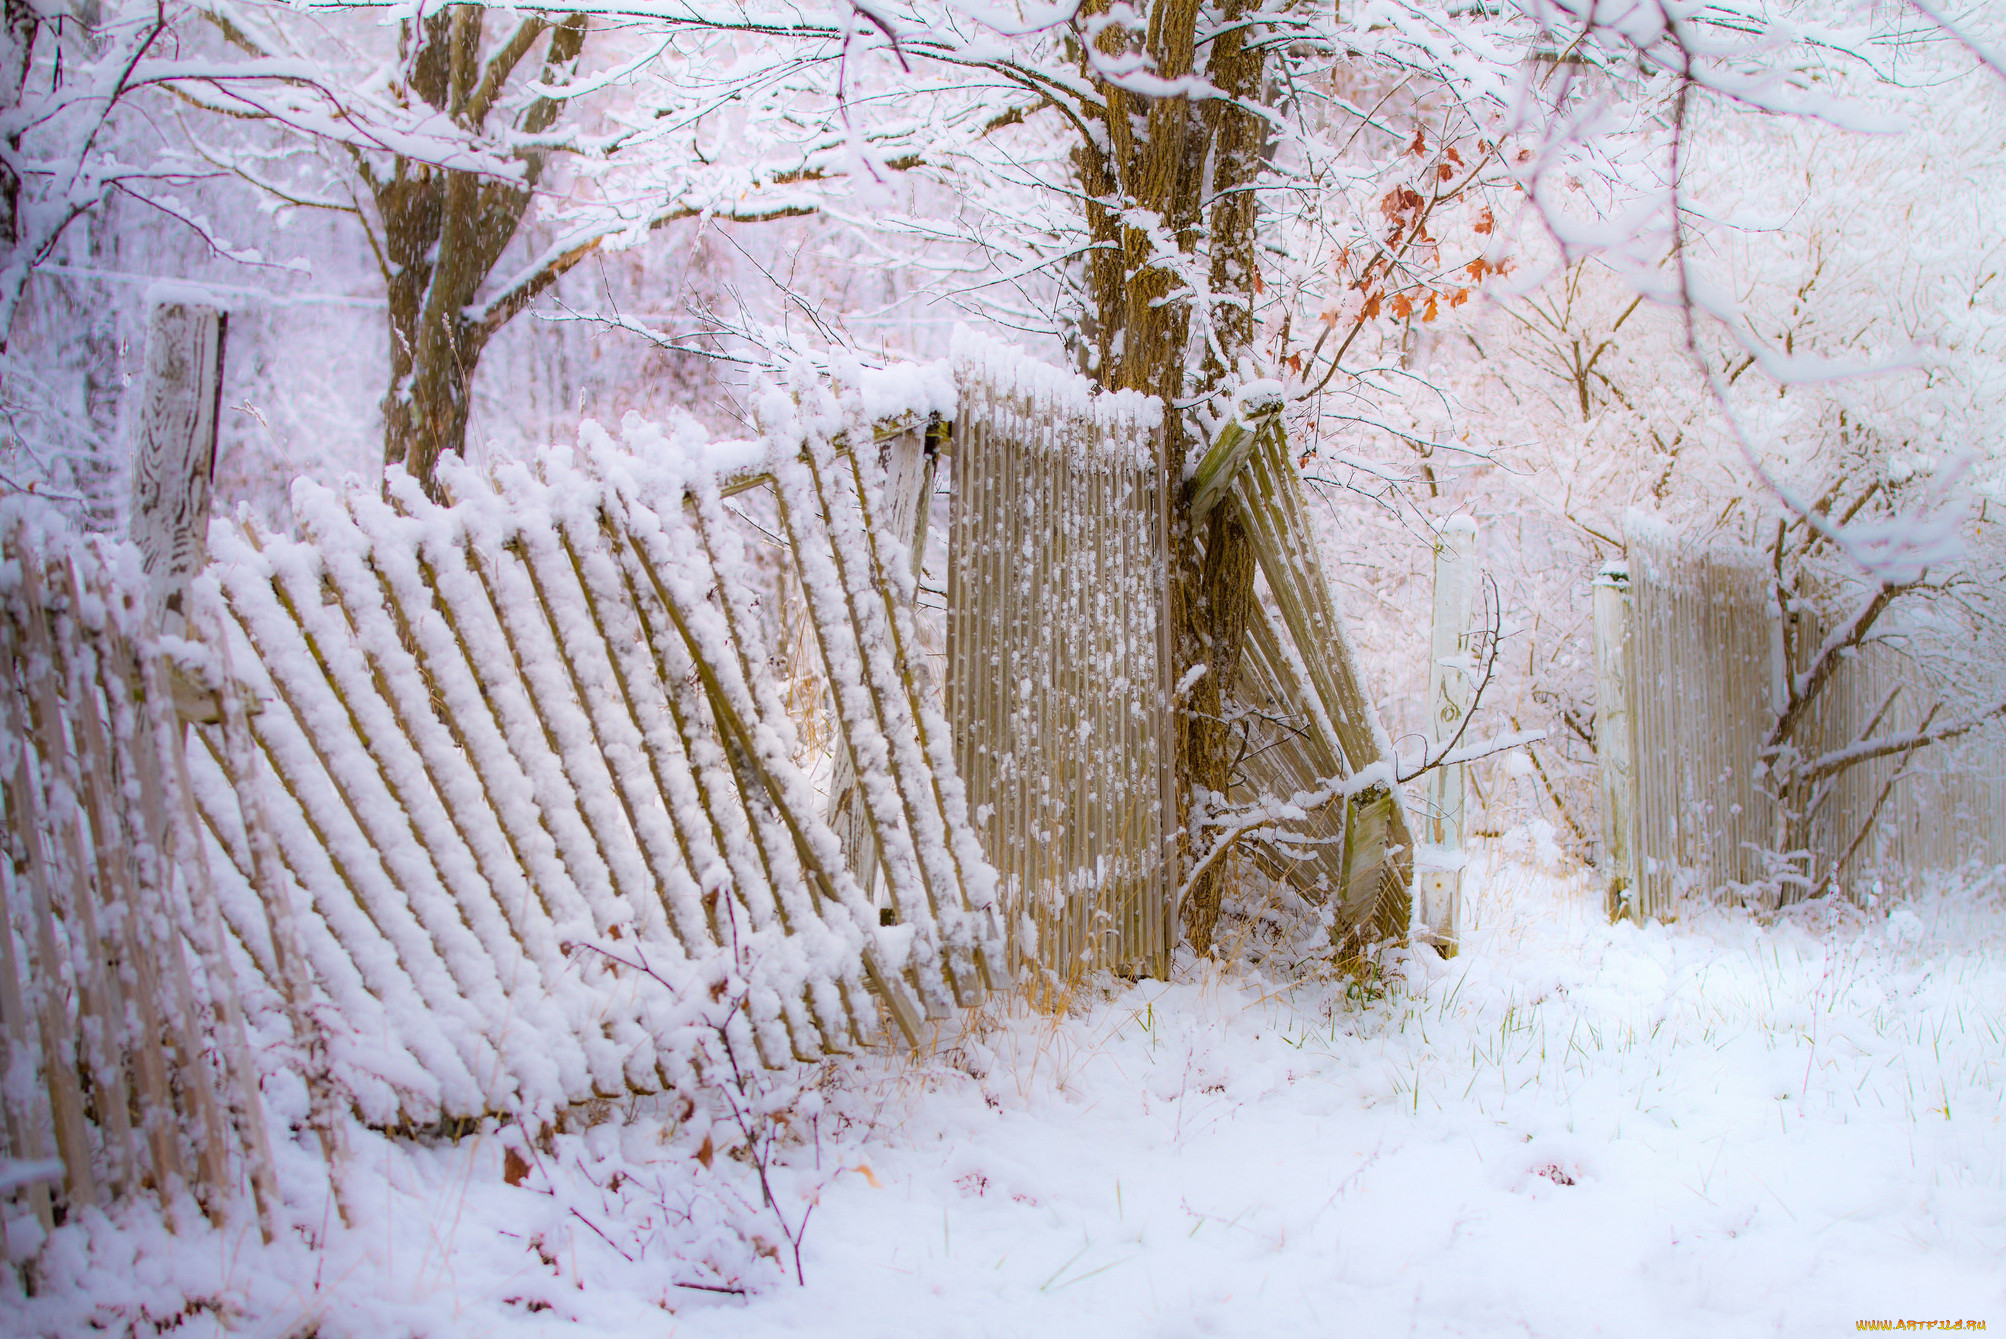 Падал старый снег. Старый деревянный забор зима. На красивый забор зимой. Деревянный забор в снегу. Зимний пейзаж с забором.